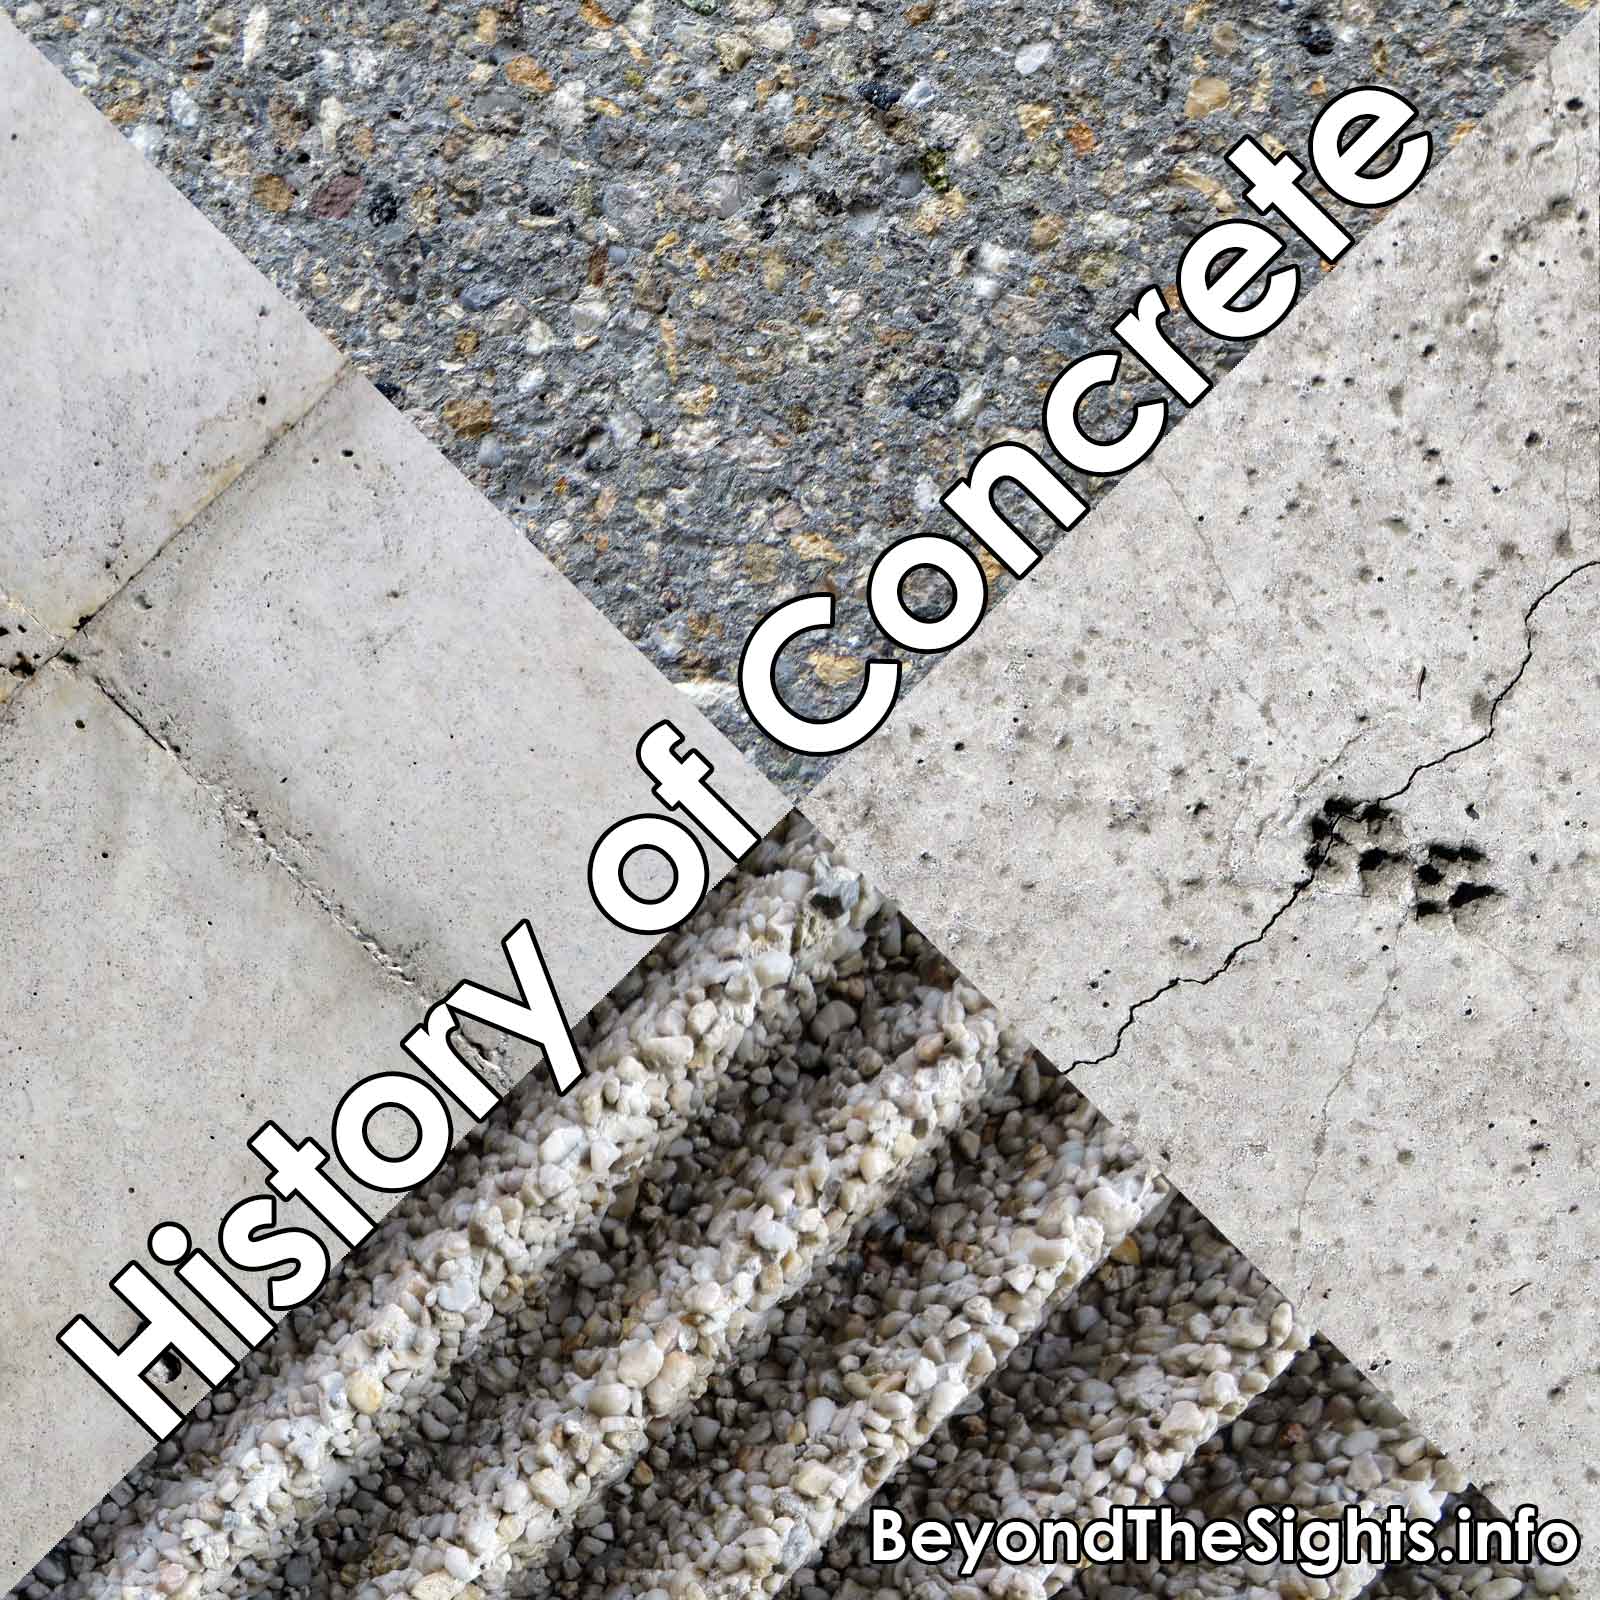 History of Concrete